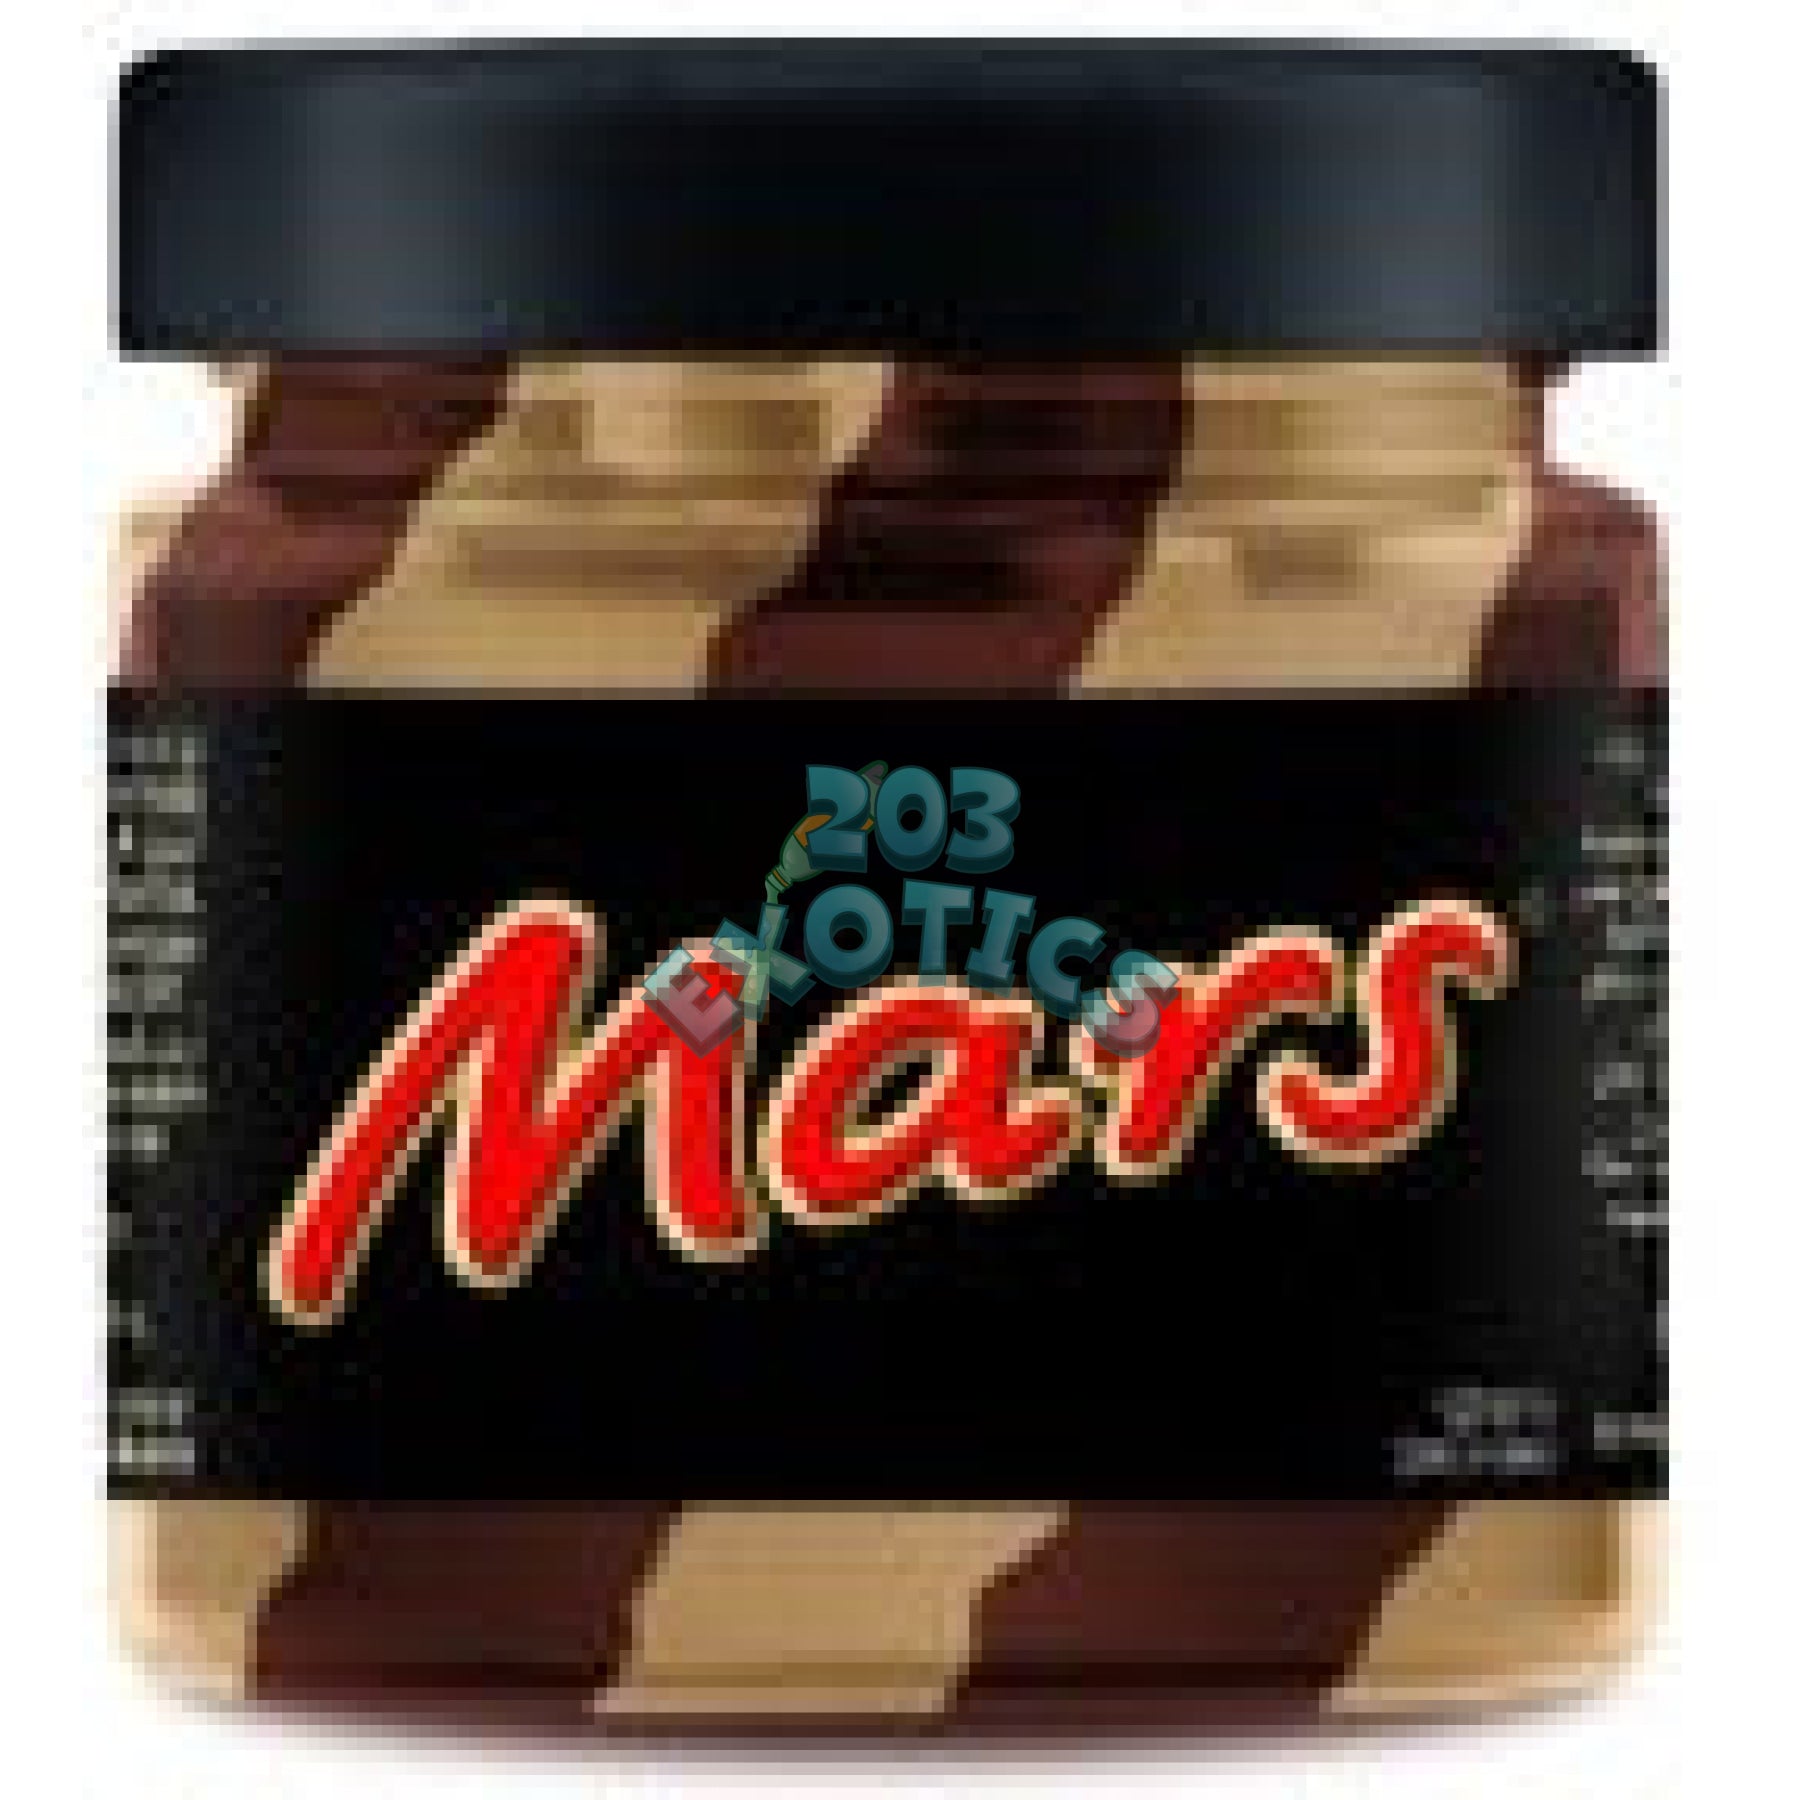 Mars Spread